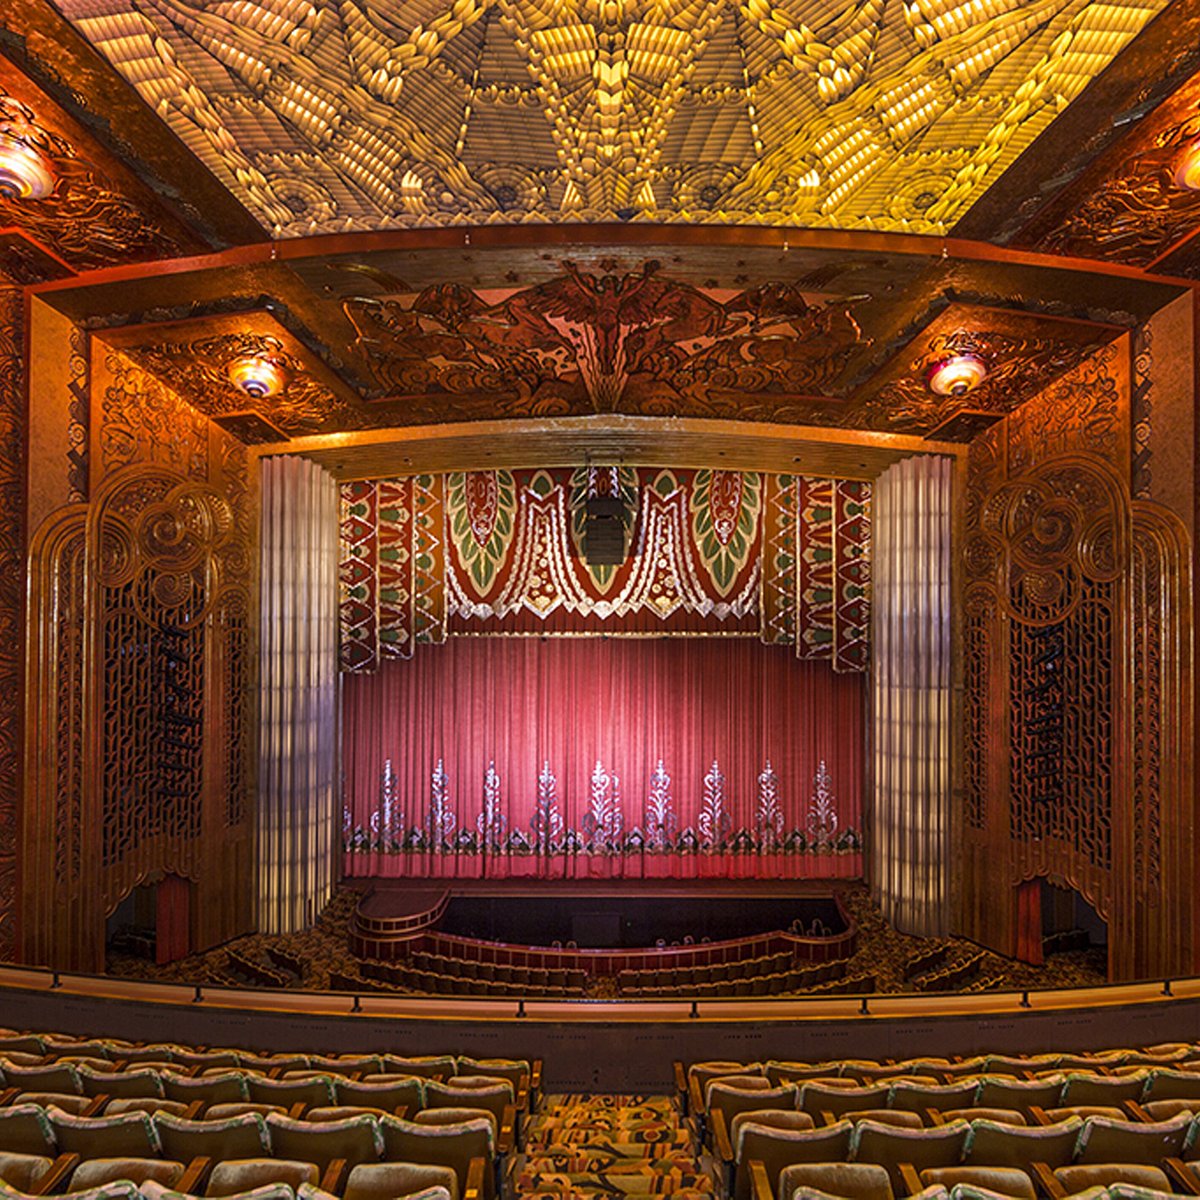 Theatre com. Кинотеатр Парамаунт Окленд. Кинотеатр Paramount Окленд (Калифорния, США). Театр Paramount Окленд. Сиэтл Парамаунт.